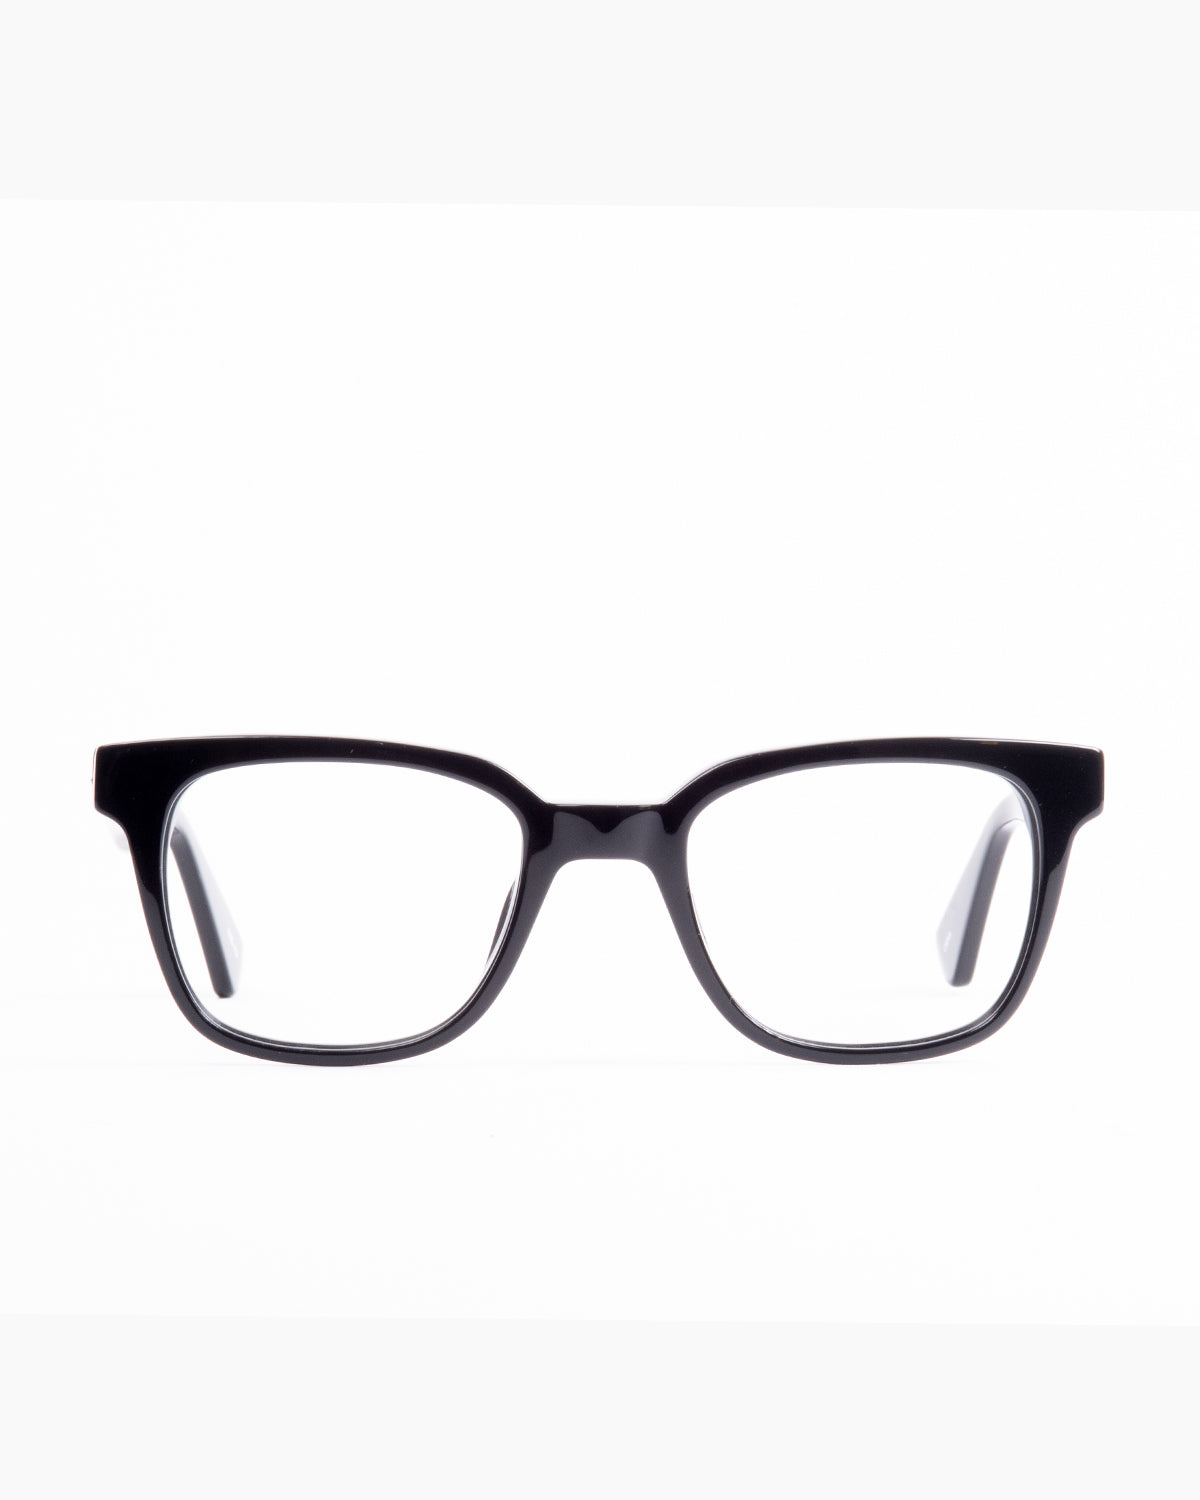 Evolve - Bennett - 112 | Bar à lunettes:  Marie-Sophie Dion